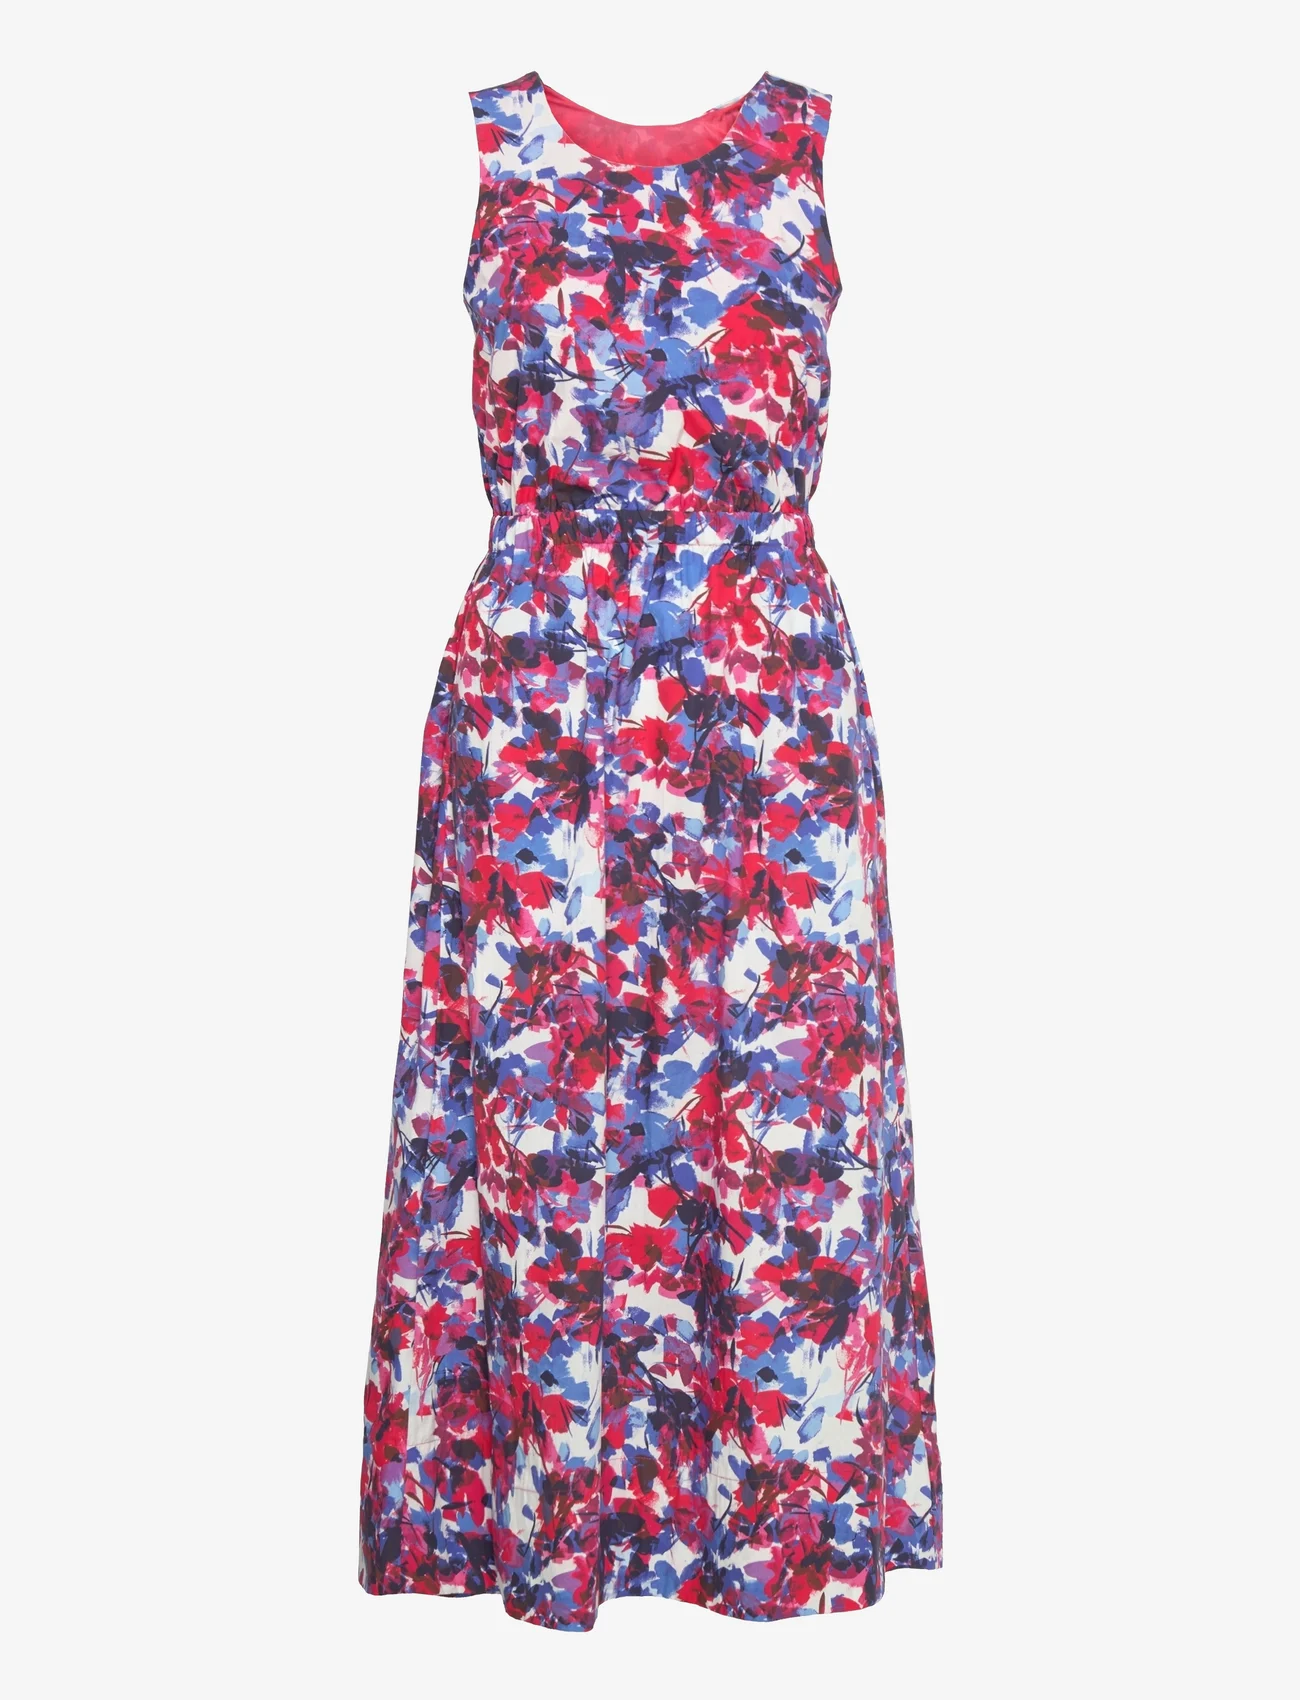 InWear - RonyaIW Dress - maxi kjoler - rhubarb flower bed - 0